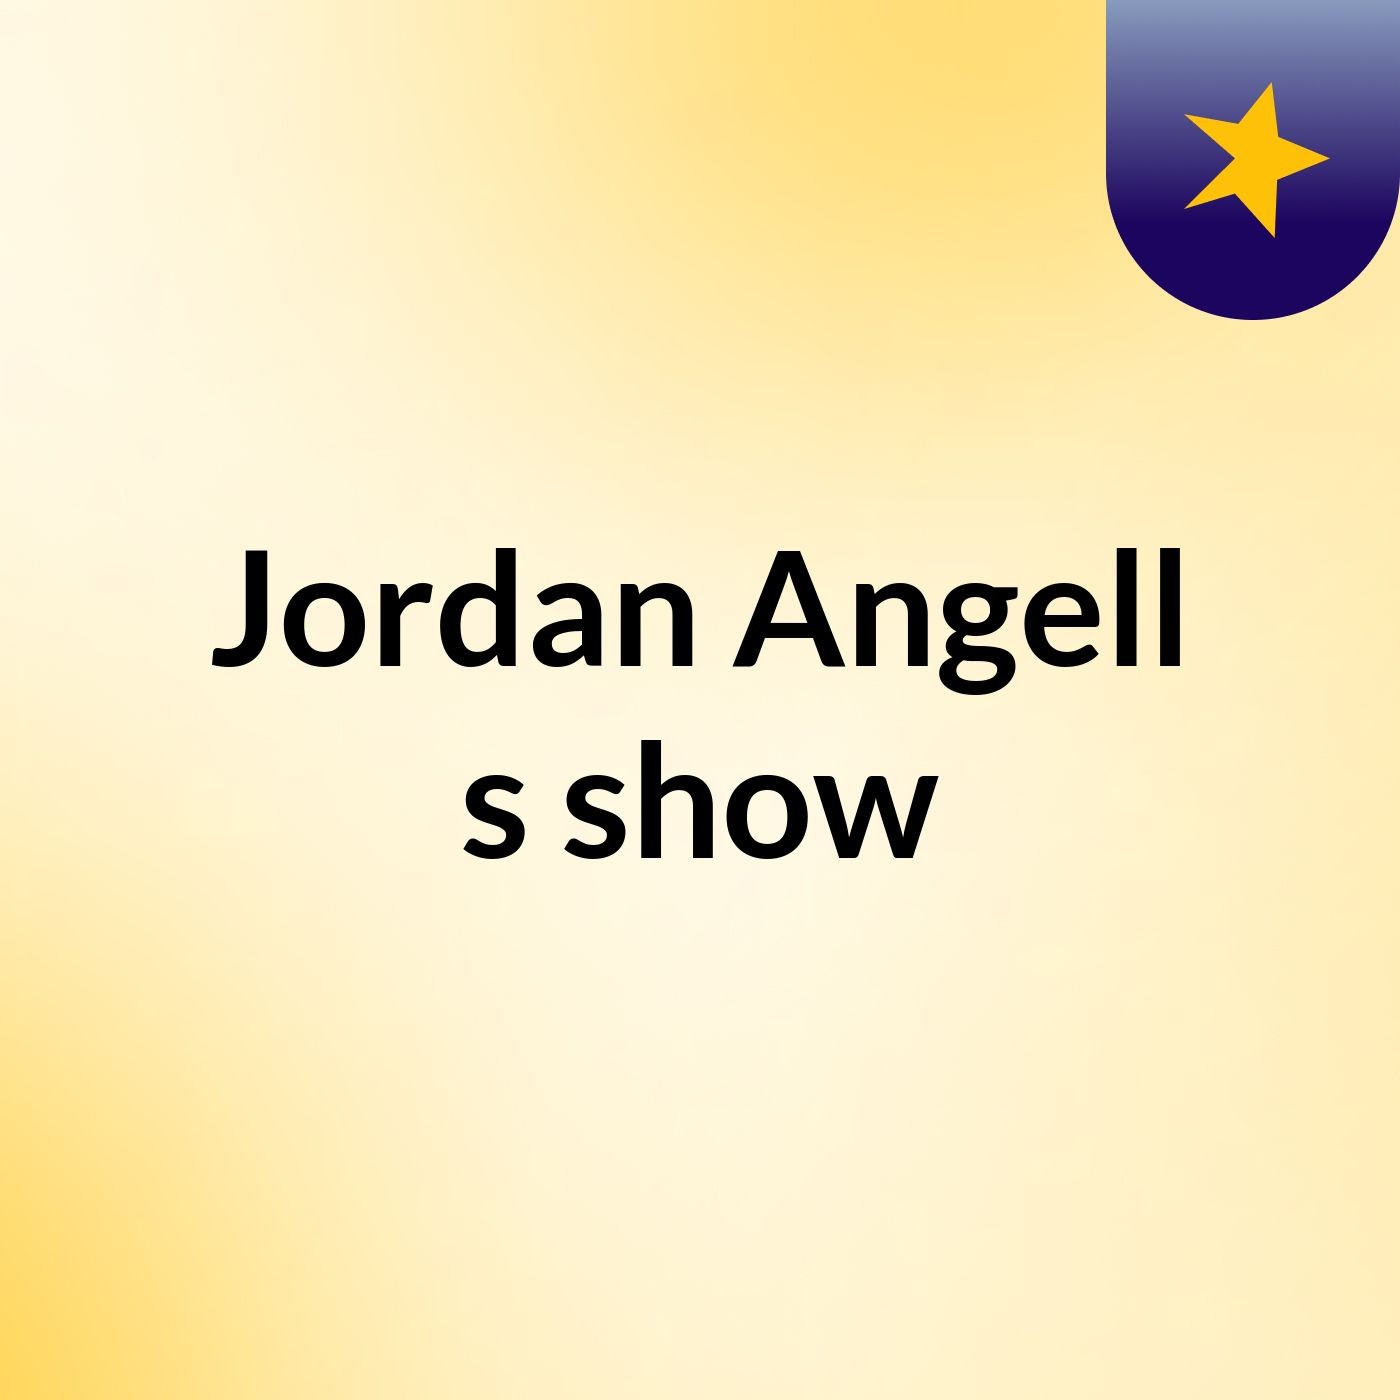 Jordan Angell's show